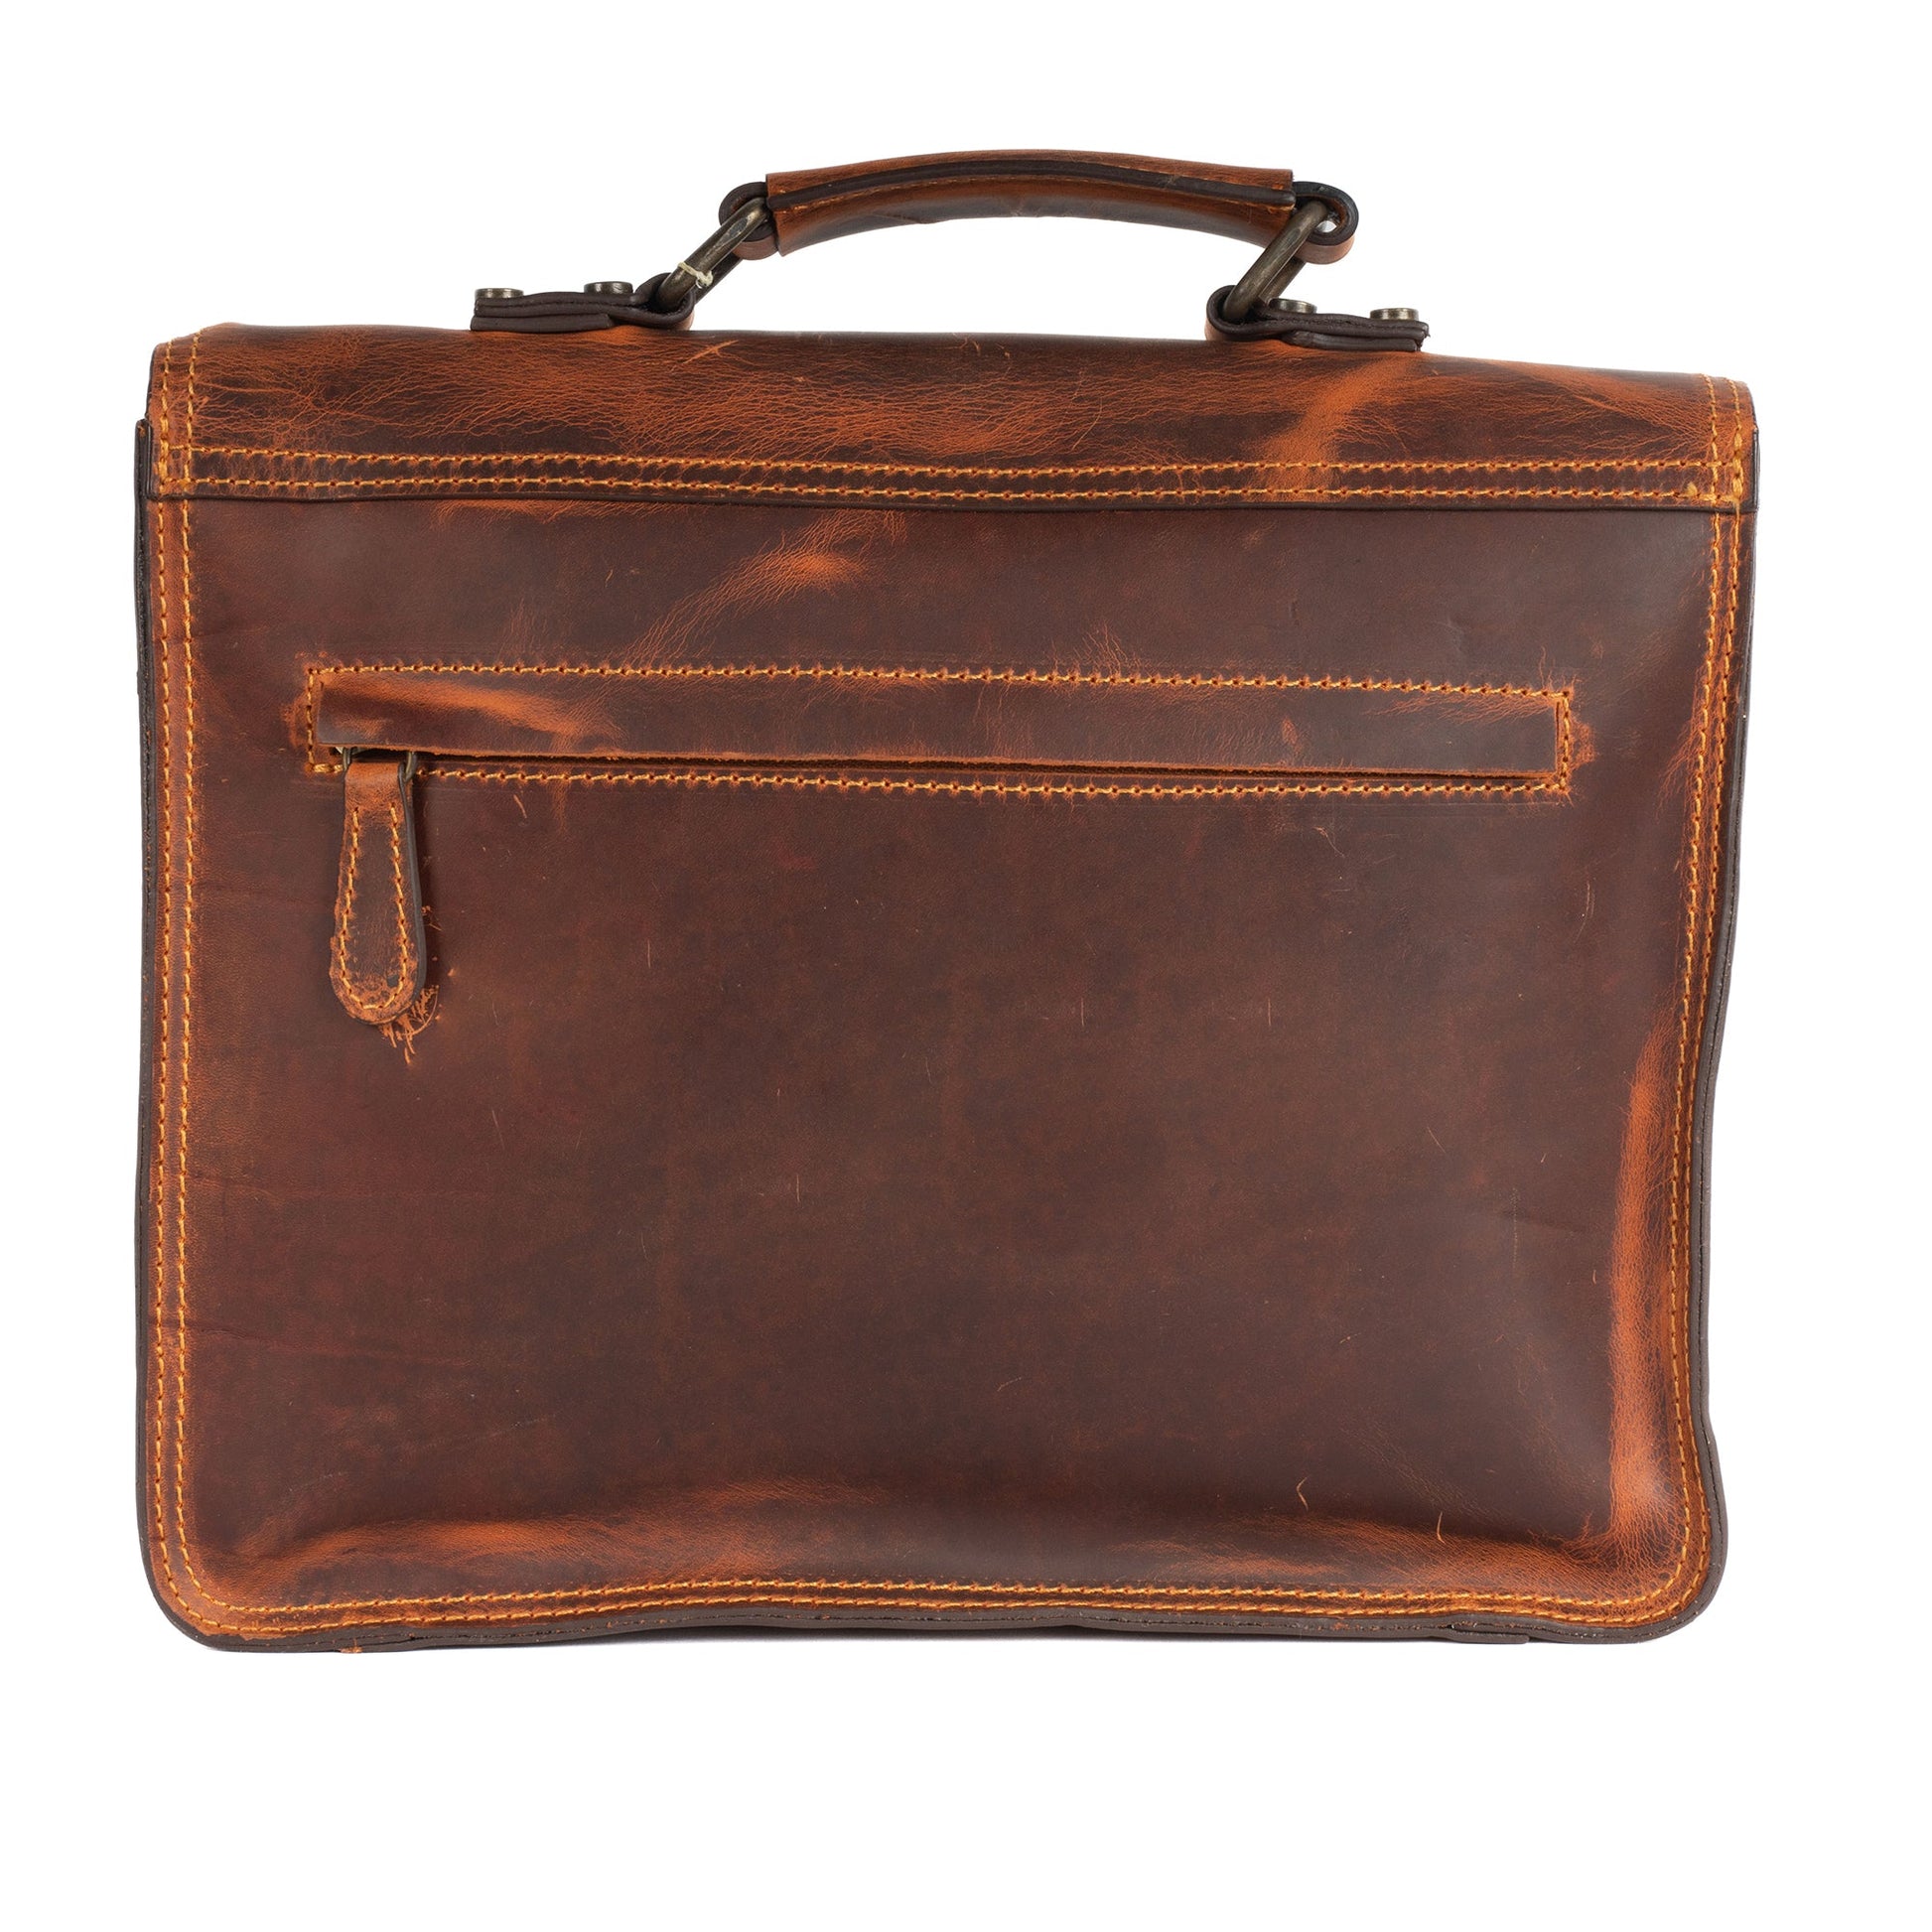 Xantus Leather Messenger Bag - Bags Zengoda Shop online from Artisan Brands